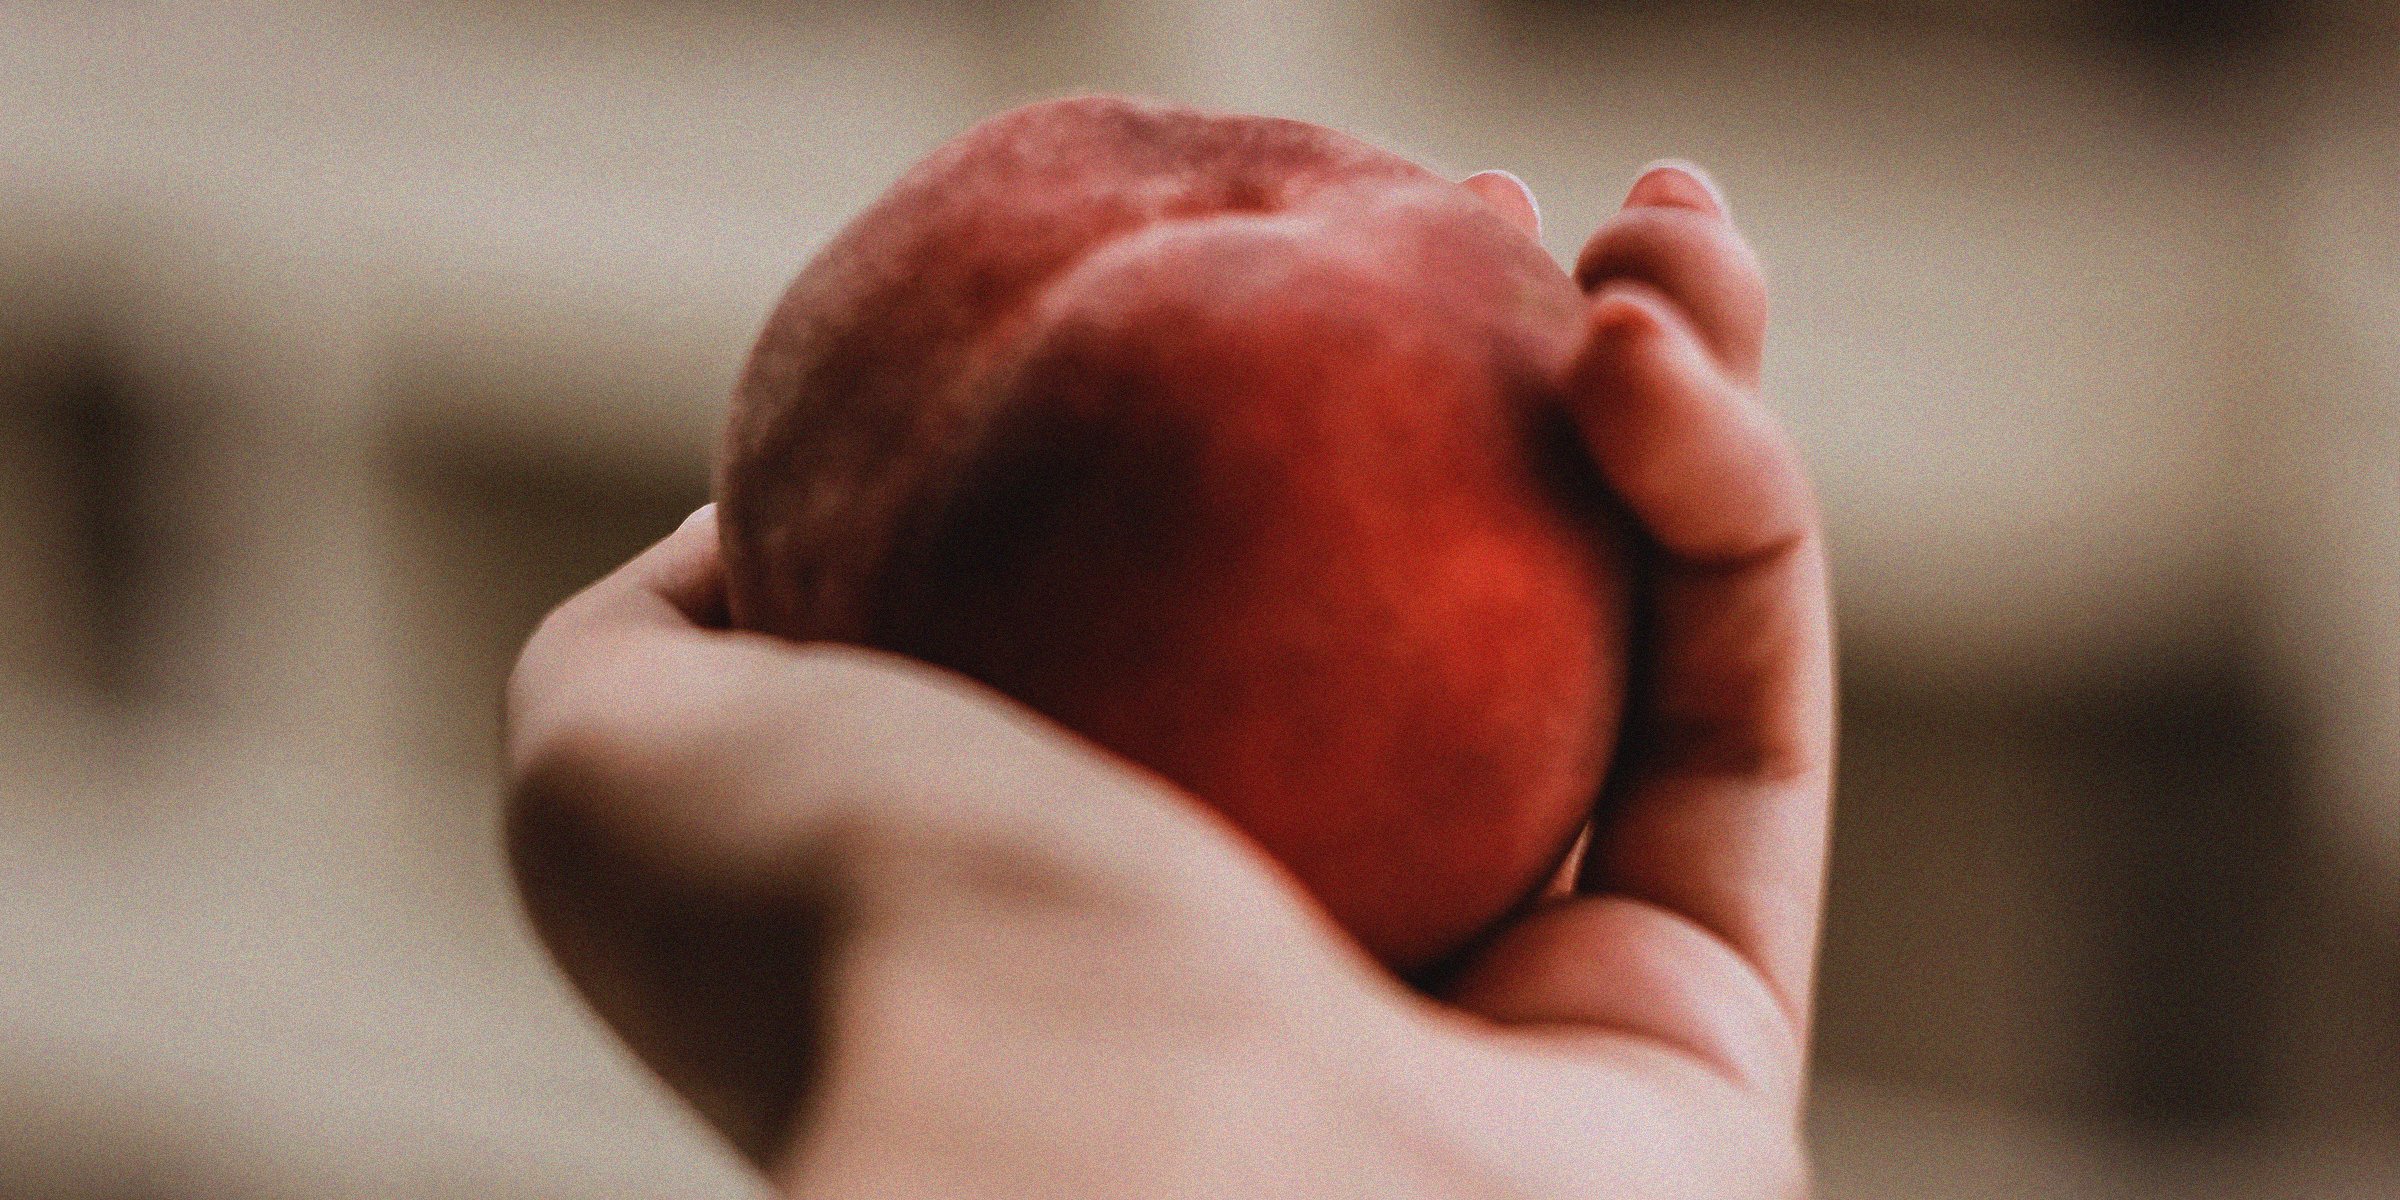 Unsplash | Hand holding a ripe peach